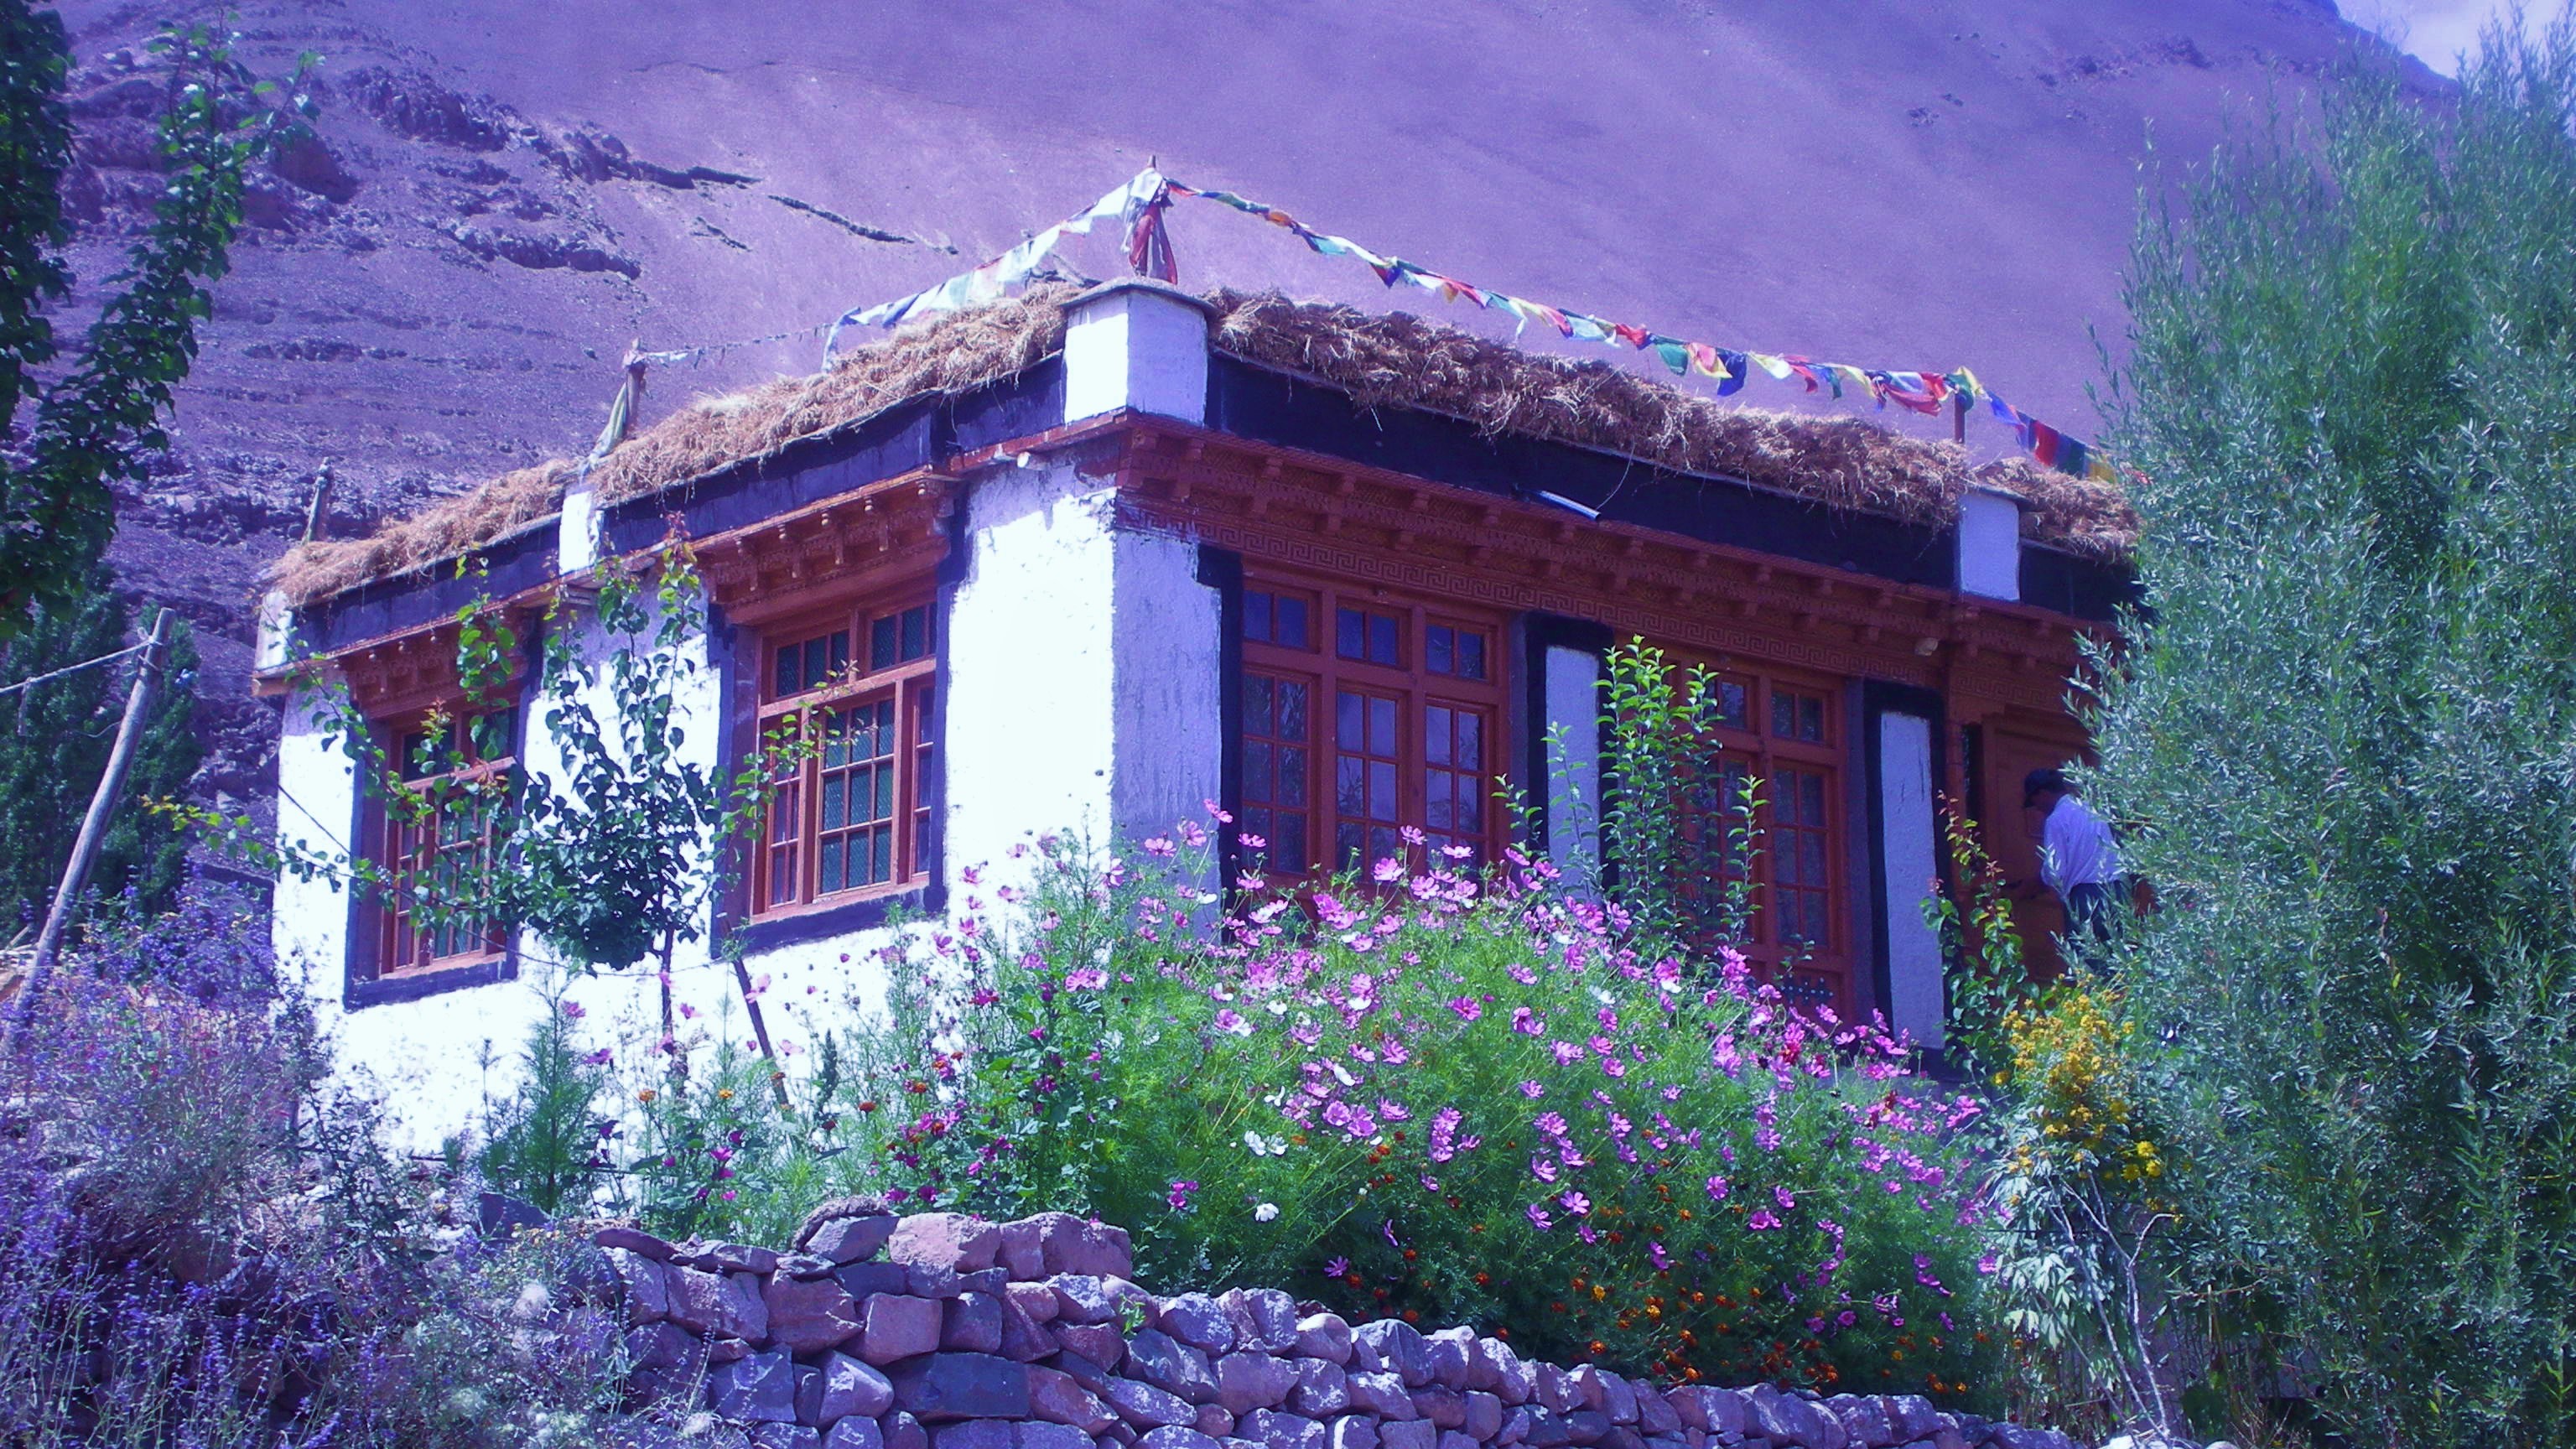 a typical ladakhi house